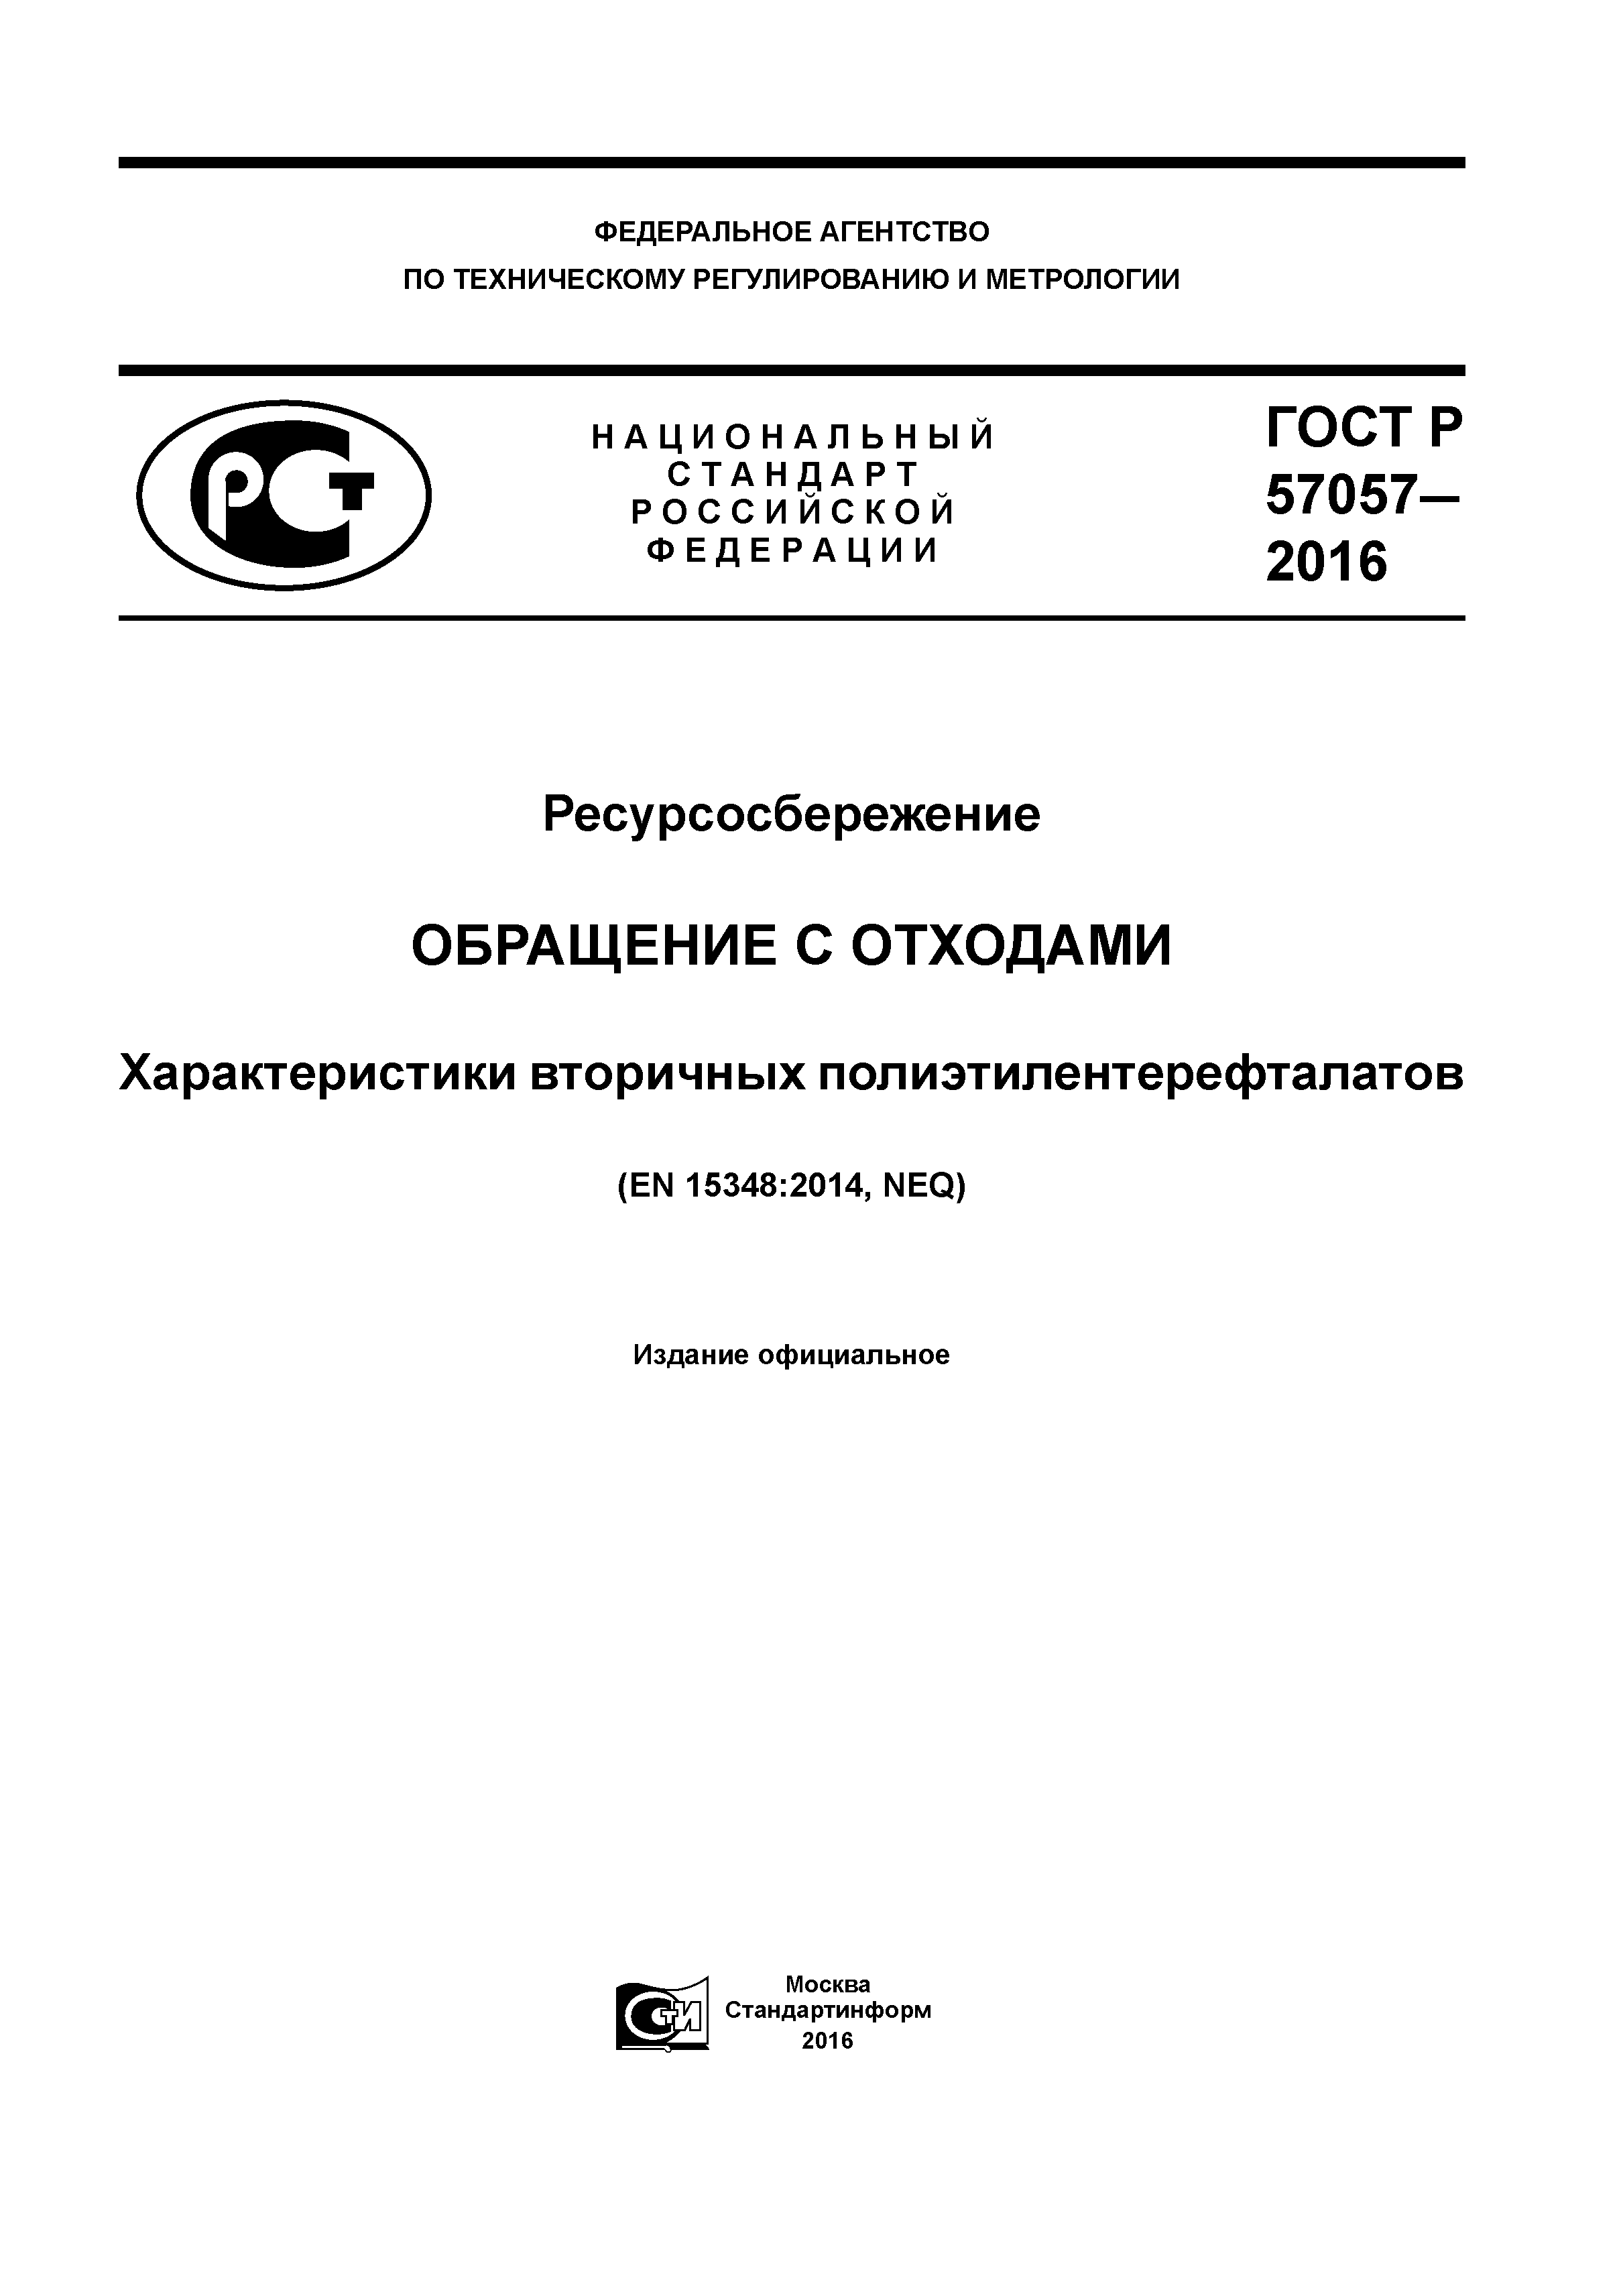 ГОСТ Р 57057-2016